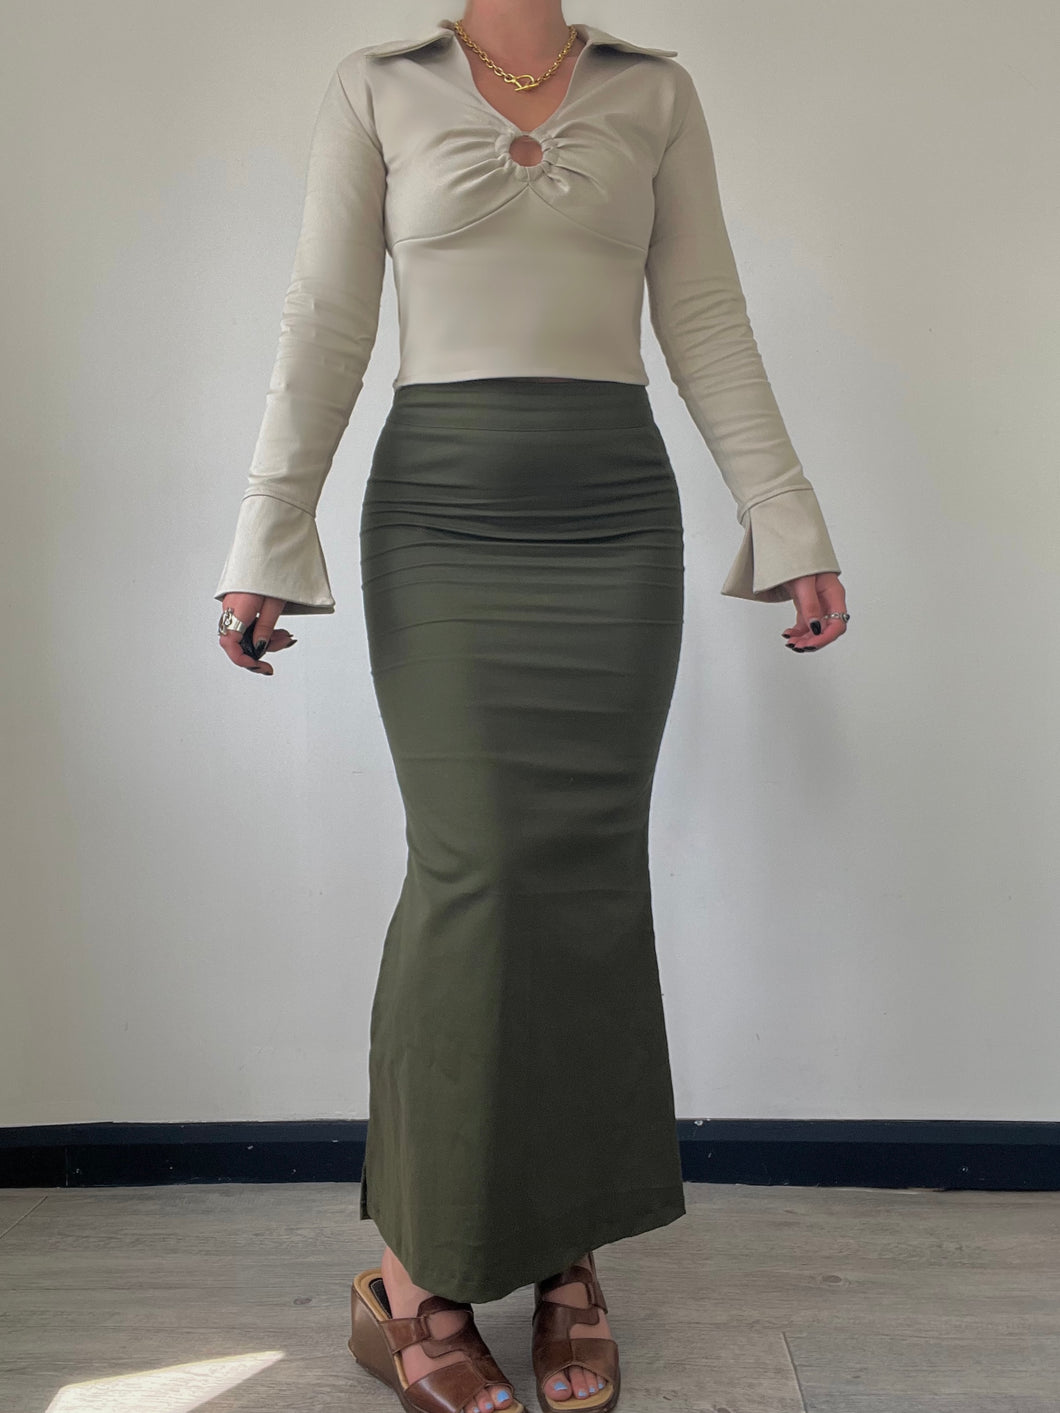 The Eve skirt in khaki